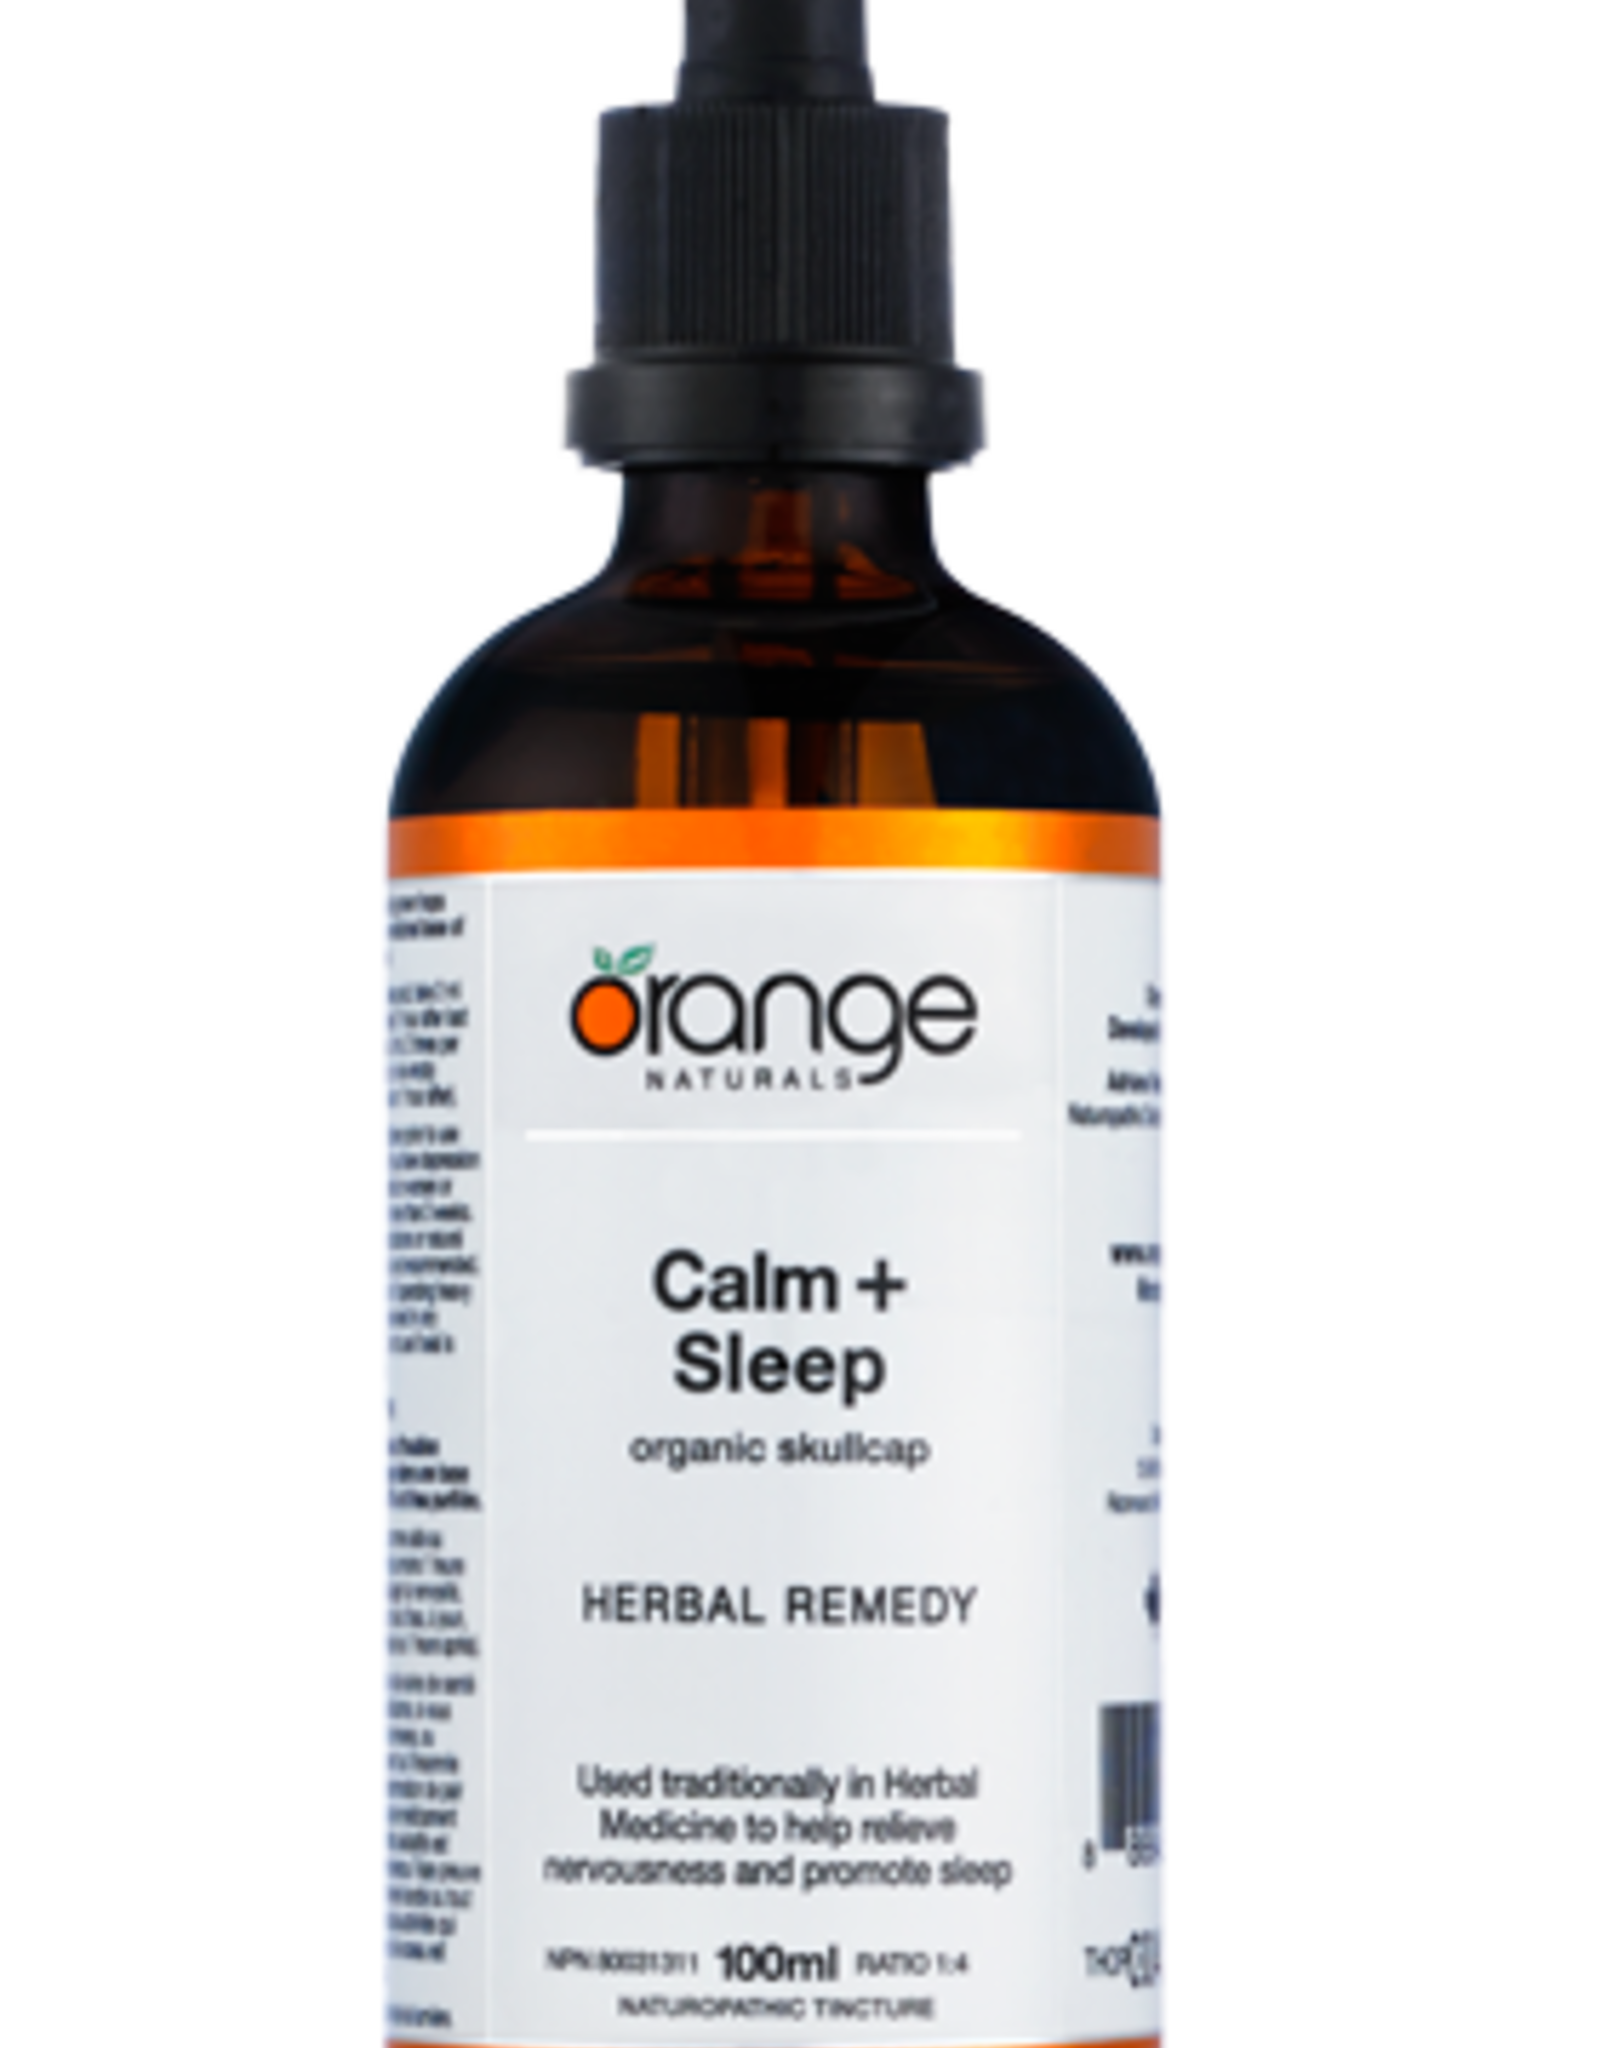 Orange Naturals Orange Naturals - Calm + Sleep Tincture